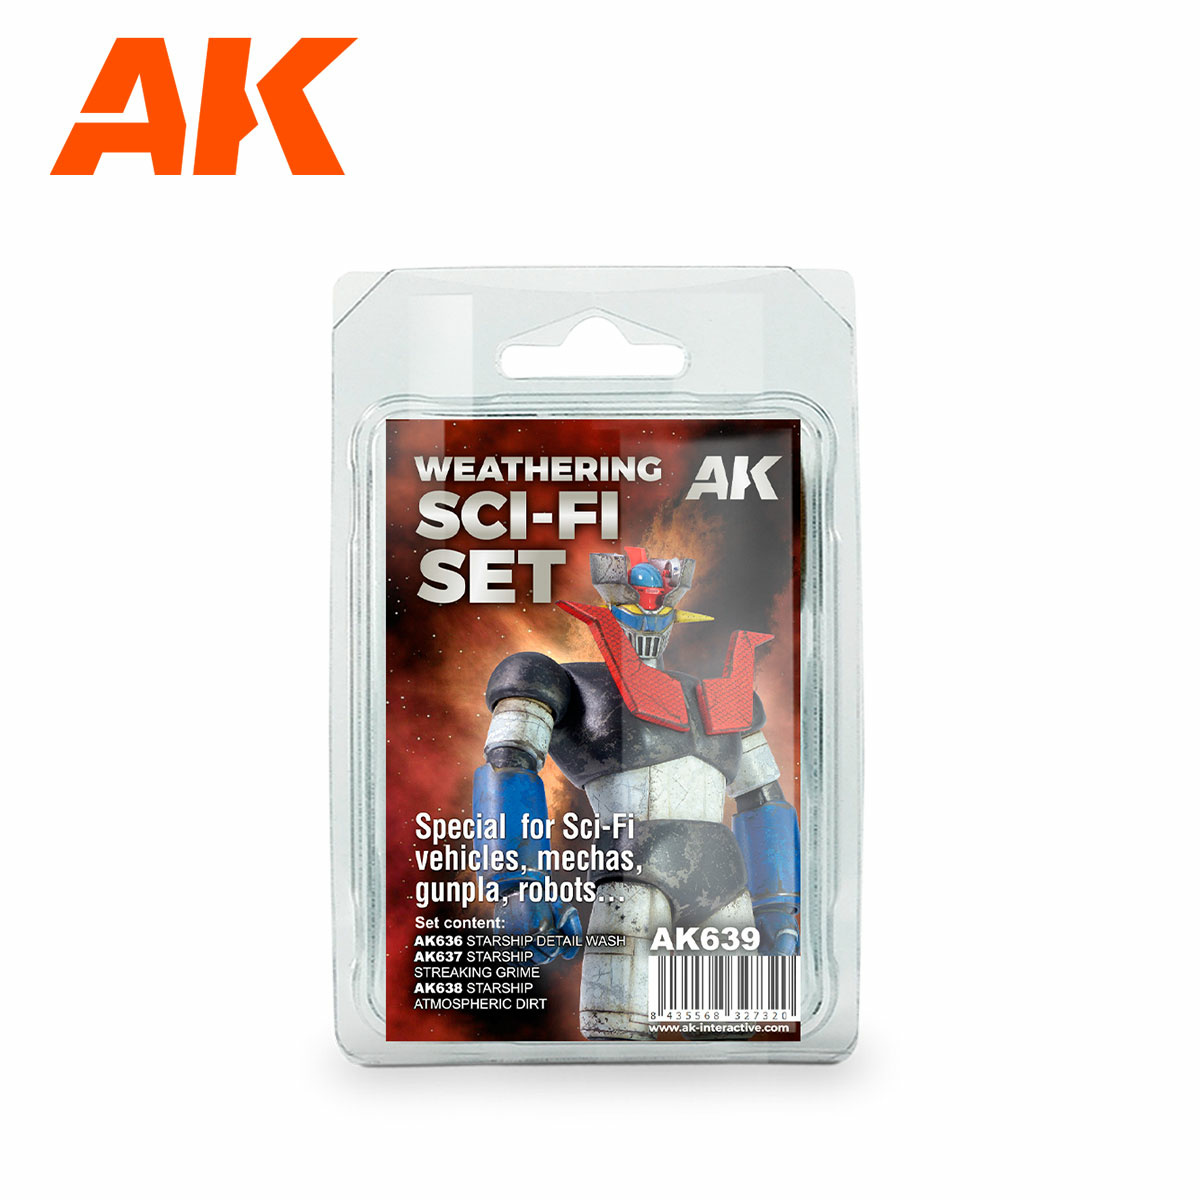 AK639 AK Interactive Science Fiction Set for Weathering / Weathering Sci Fi Set